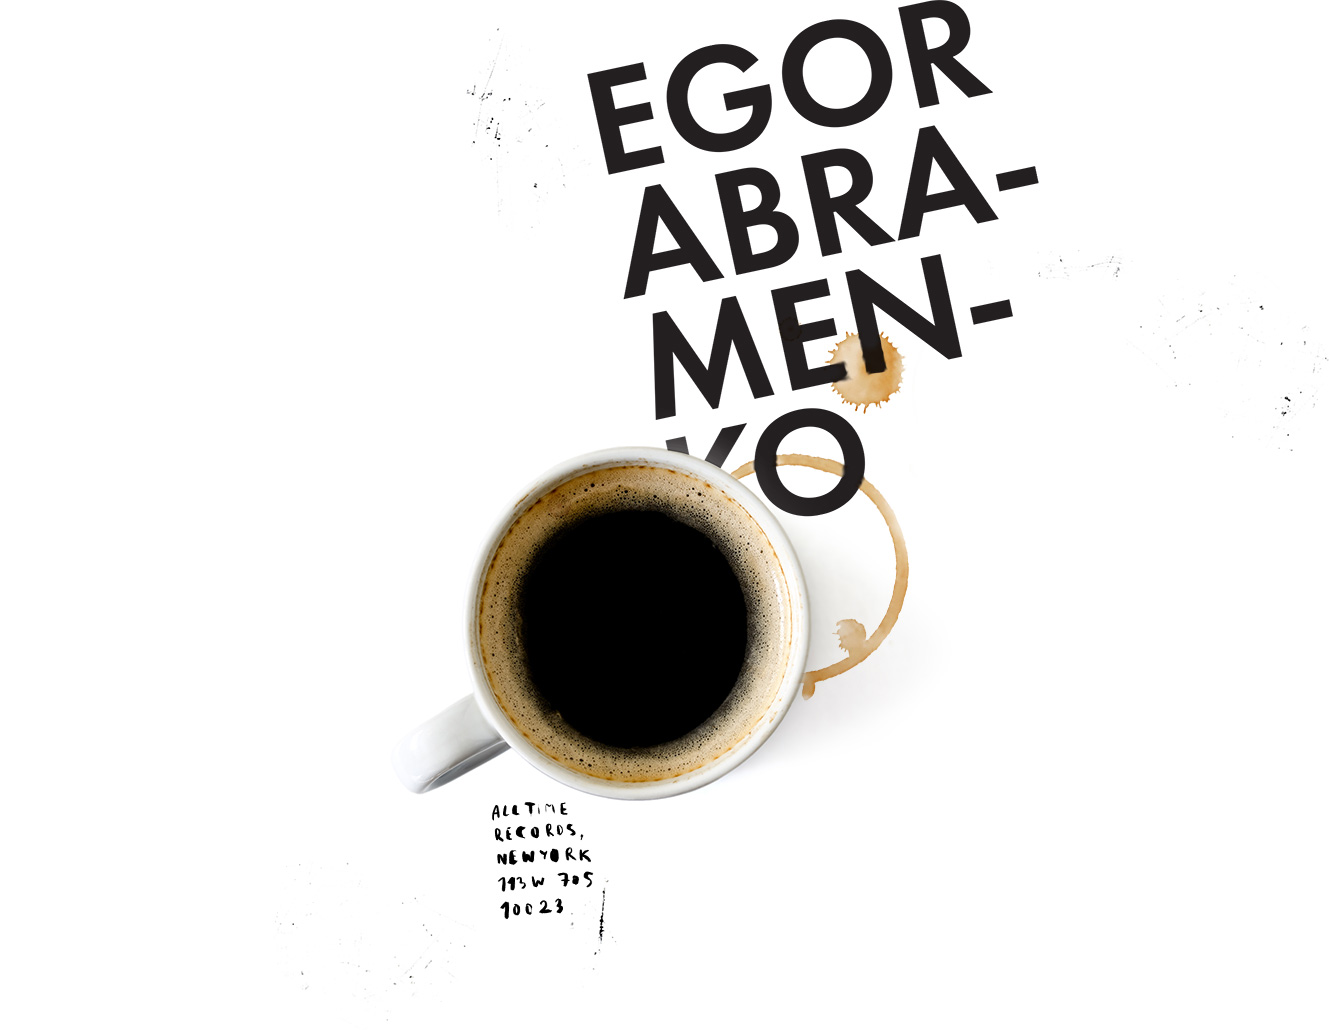 coffee cup with egor abramenko logo nearby